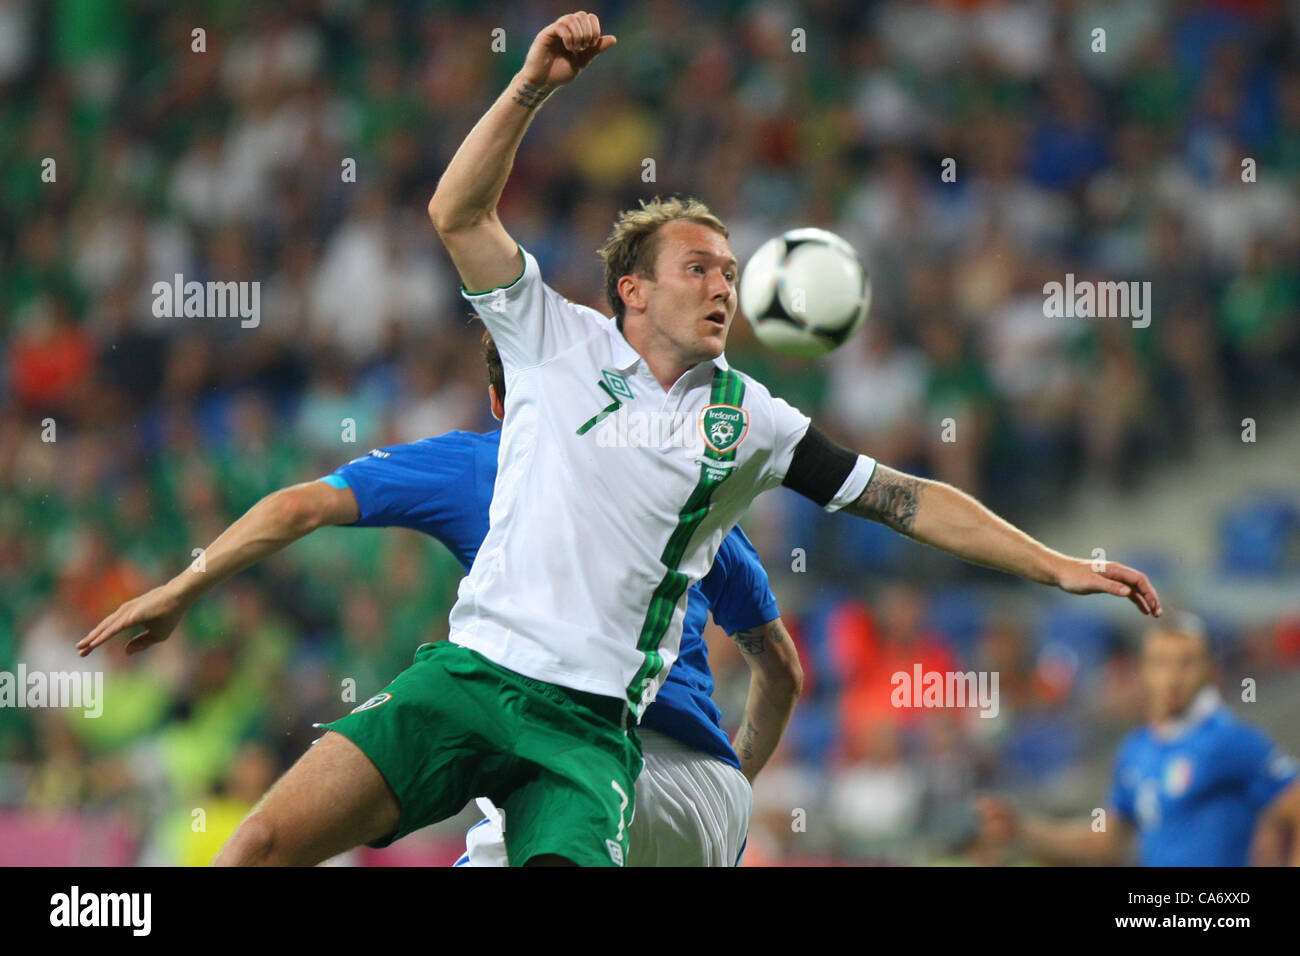 18.06.2012 , Poznan, Poland. European Football Championships. Republic of Ireland versus Italy. Round 3. AIDEN MCGEADY (IRL) Stock Photo